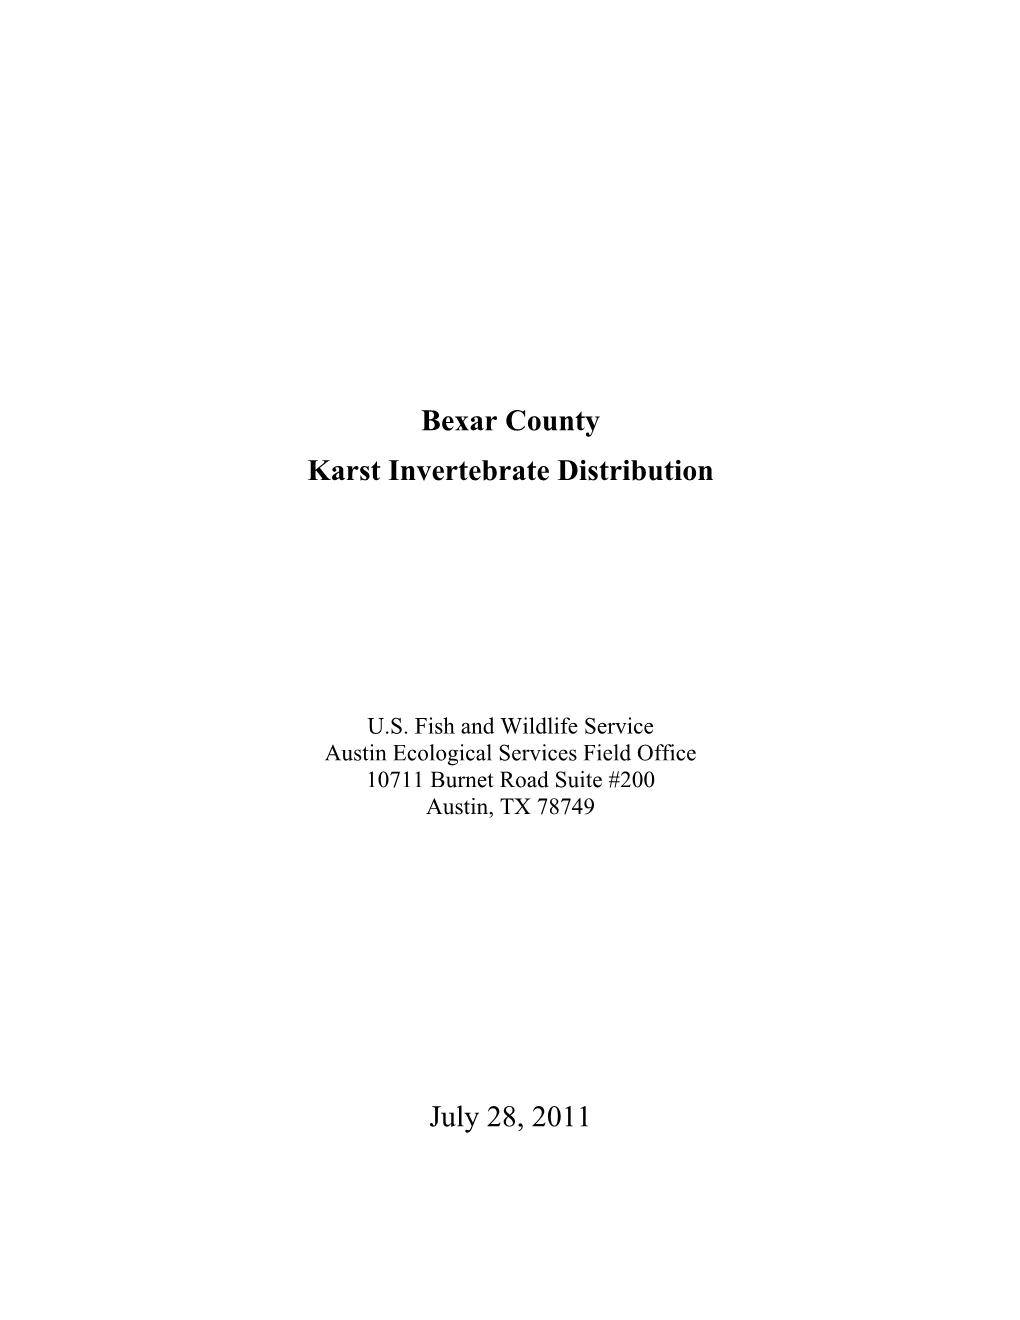 Bexar County Karst Invertebrates Distribution